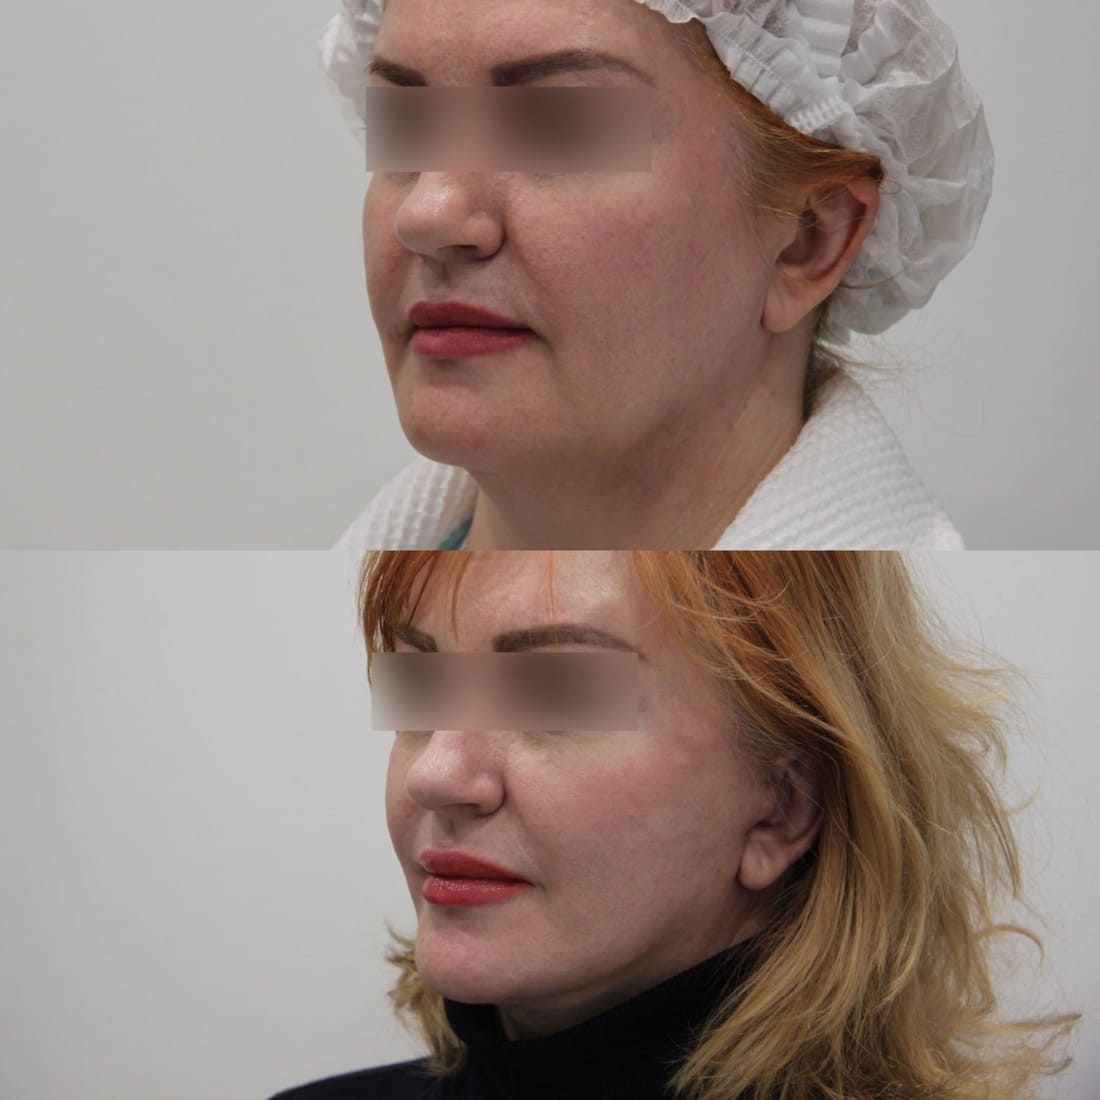 Липосакция лица - фото до и после